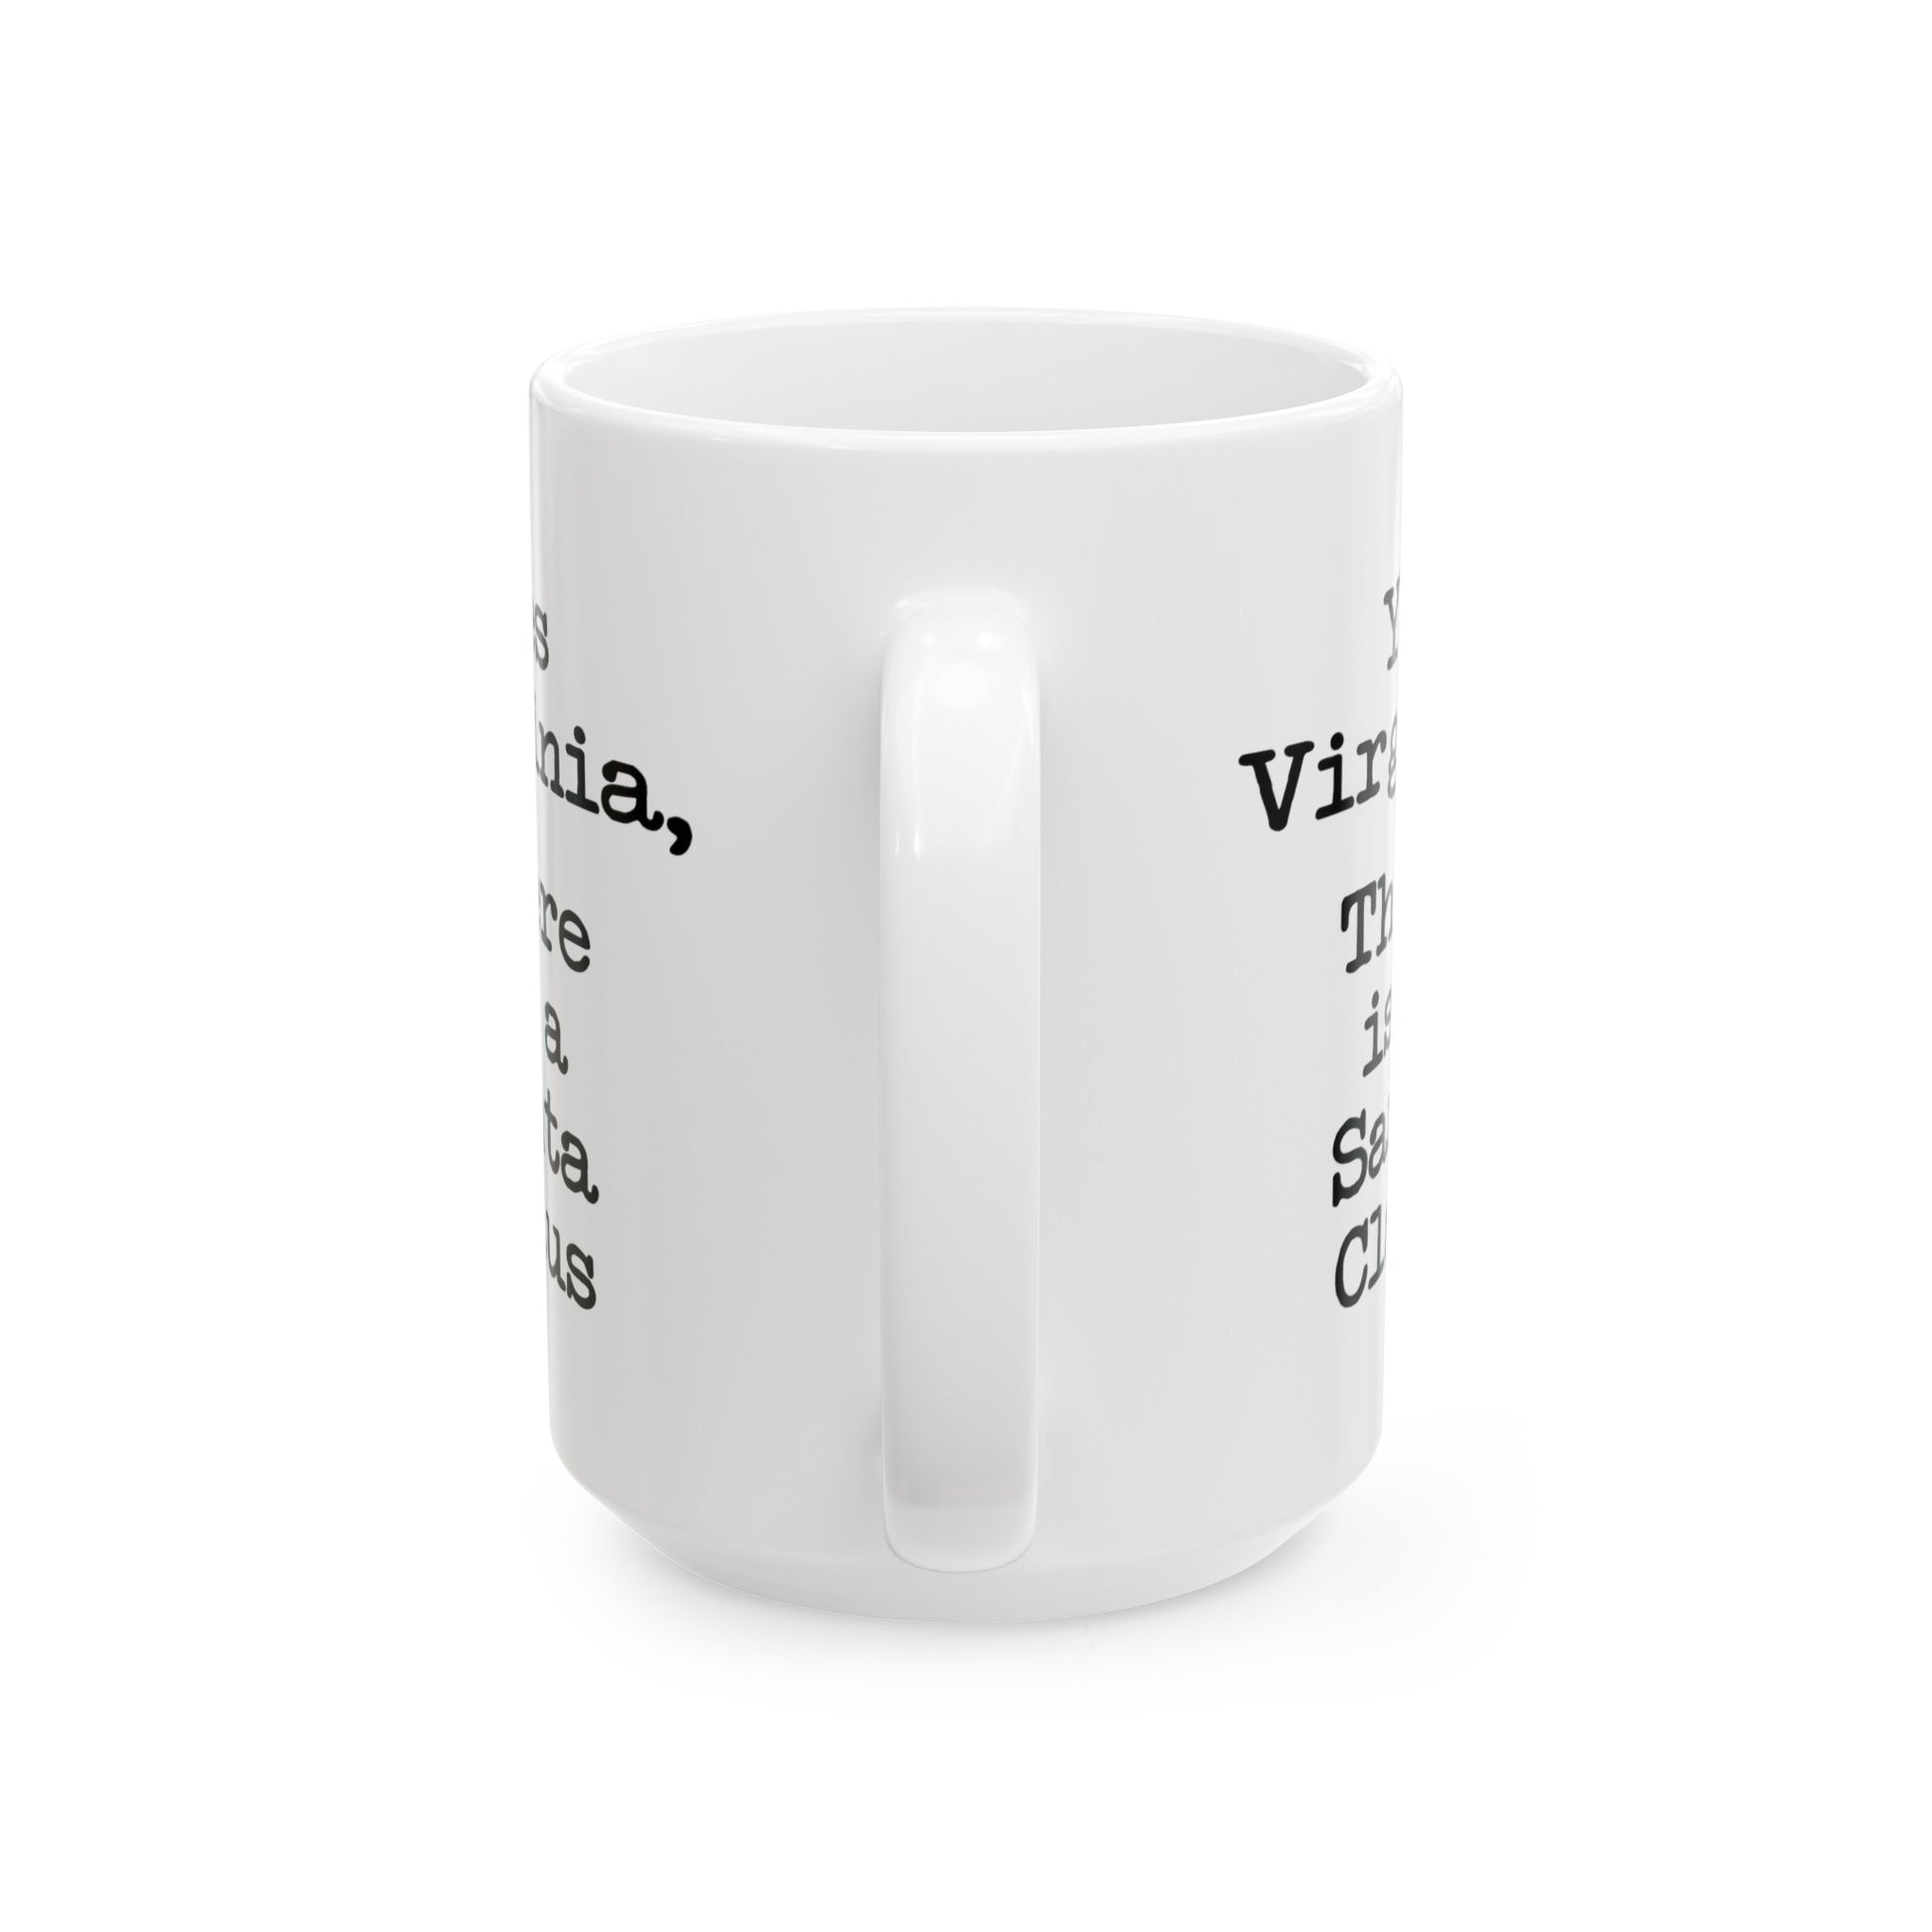 Yes Virgina Coffee Mug - Double Sided White Ceramic 15oz by TheGlassyLass.com